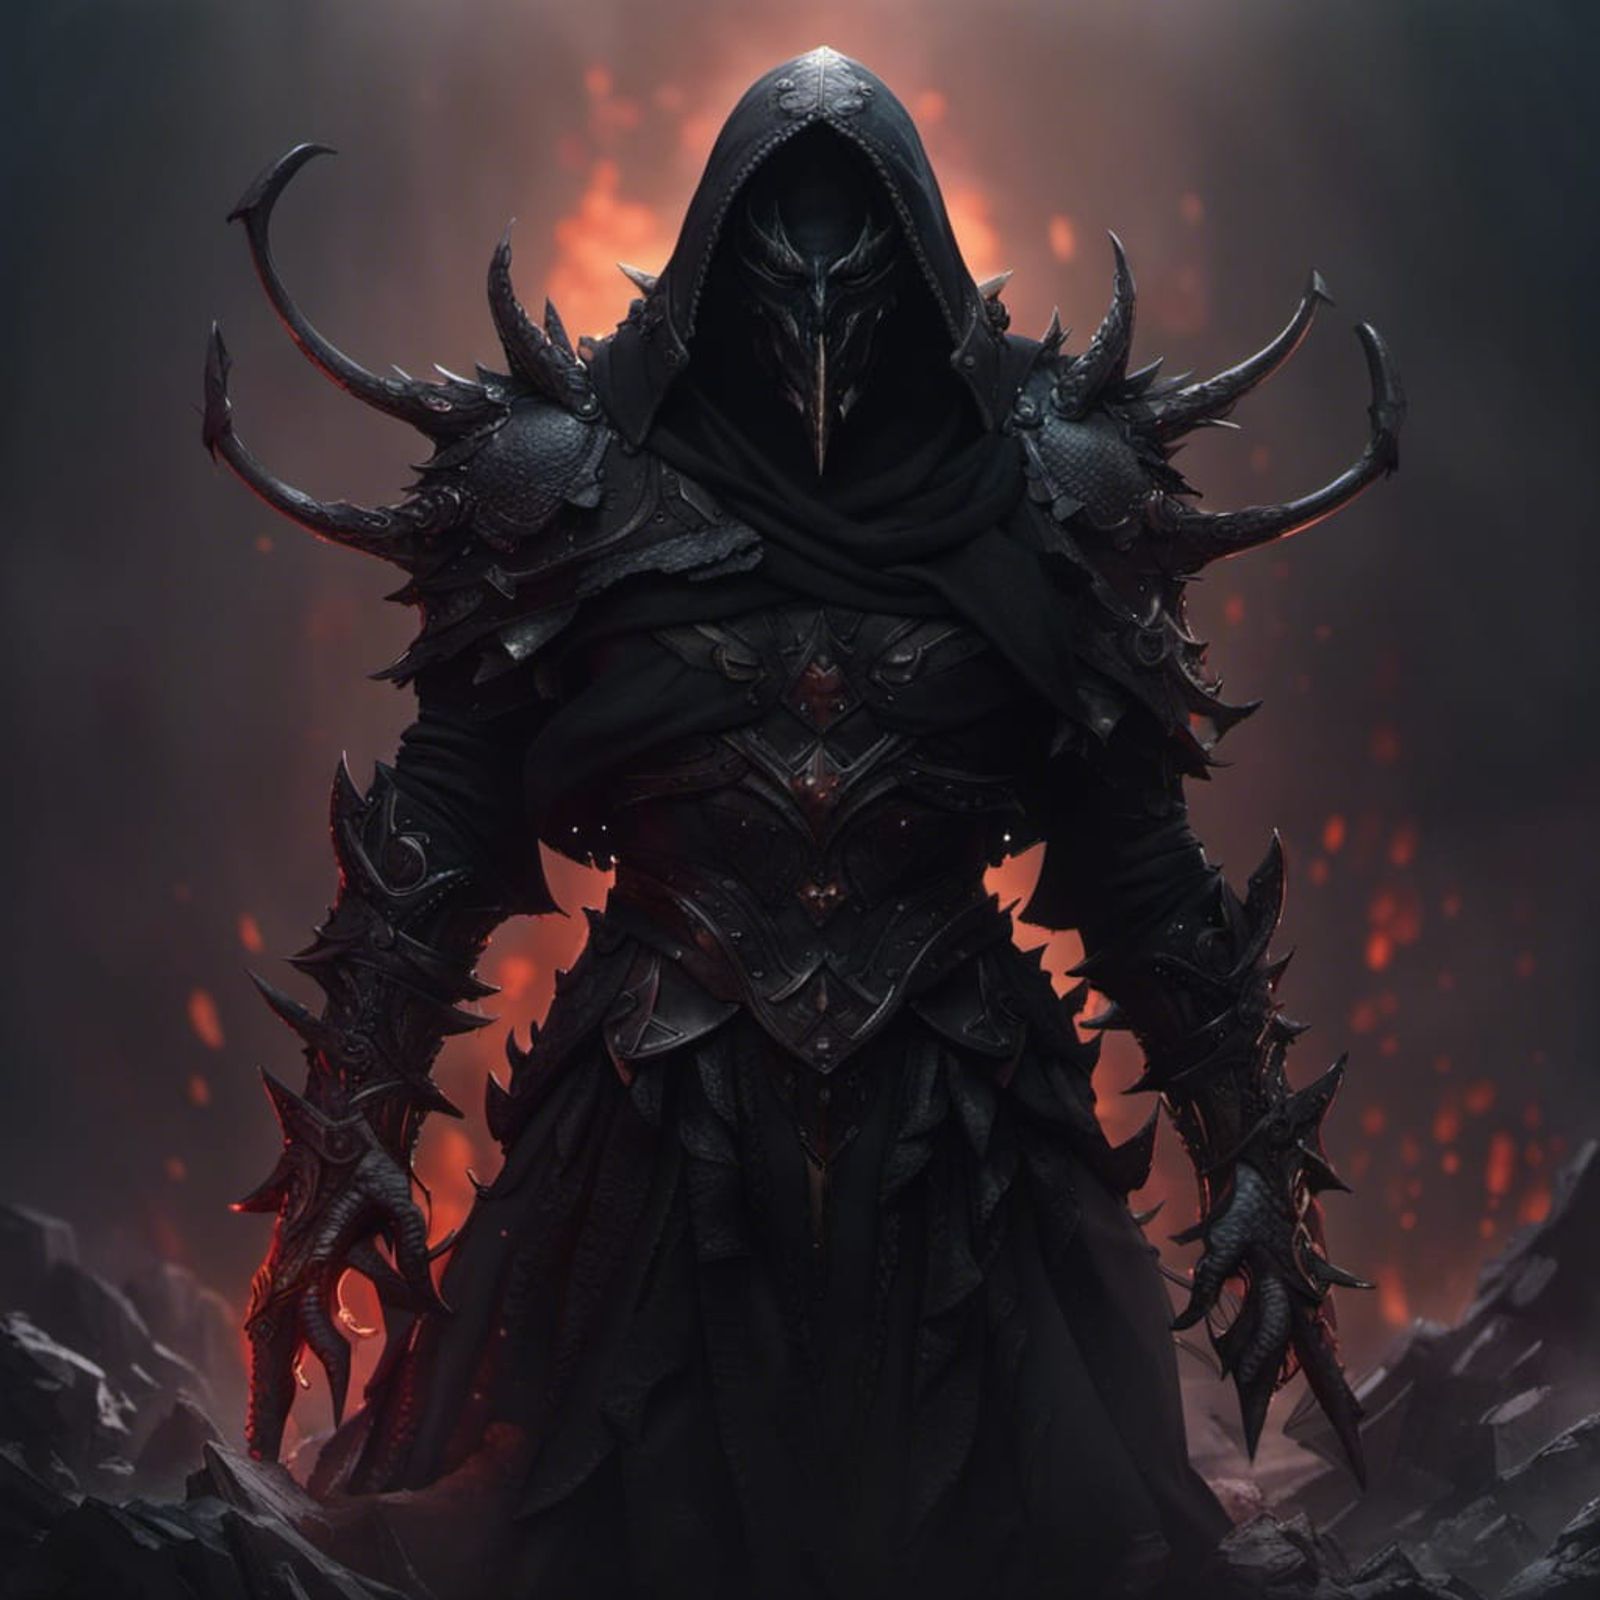 prompthunt: portrait pale man necromancer evil dark fantasy